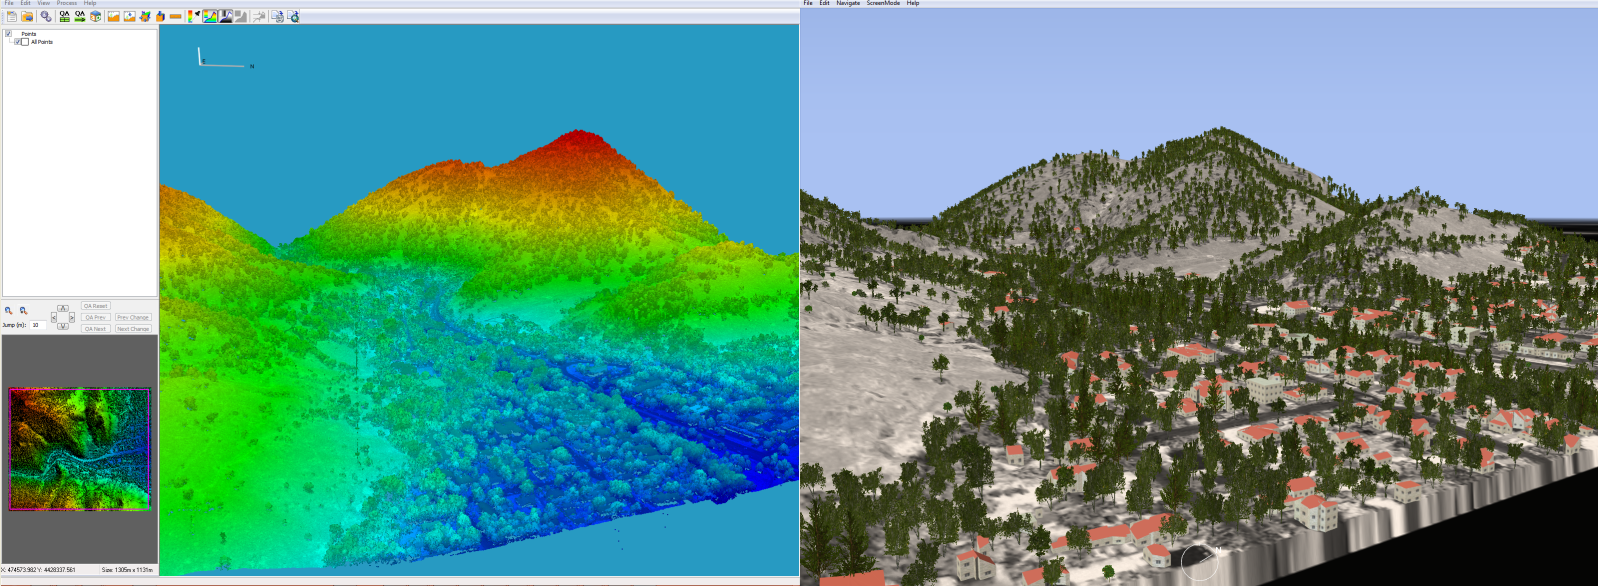 Integrating LiDAR Analysis into your GIS - L3Harris Geospatial